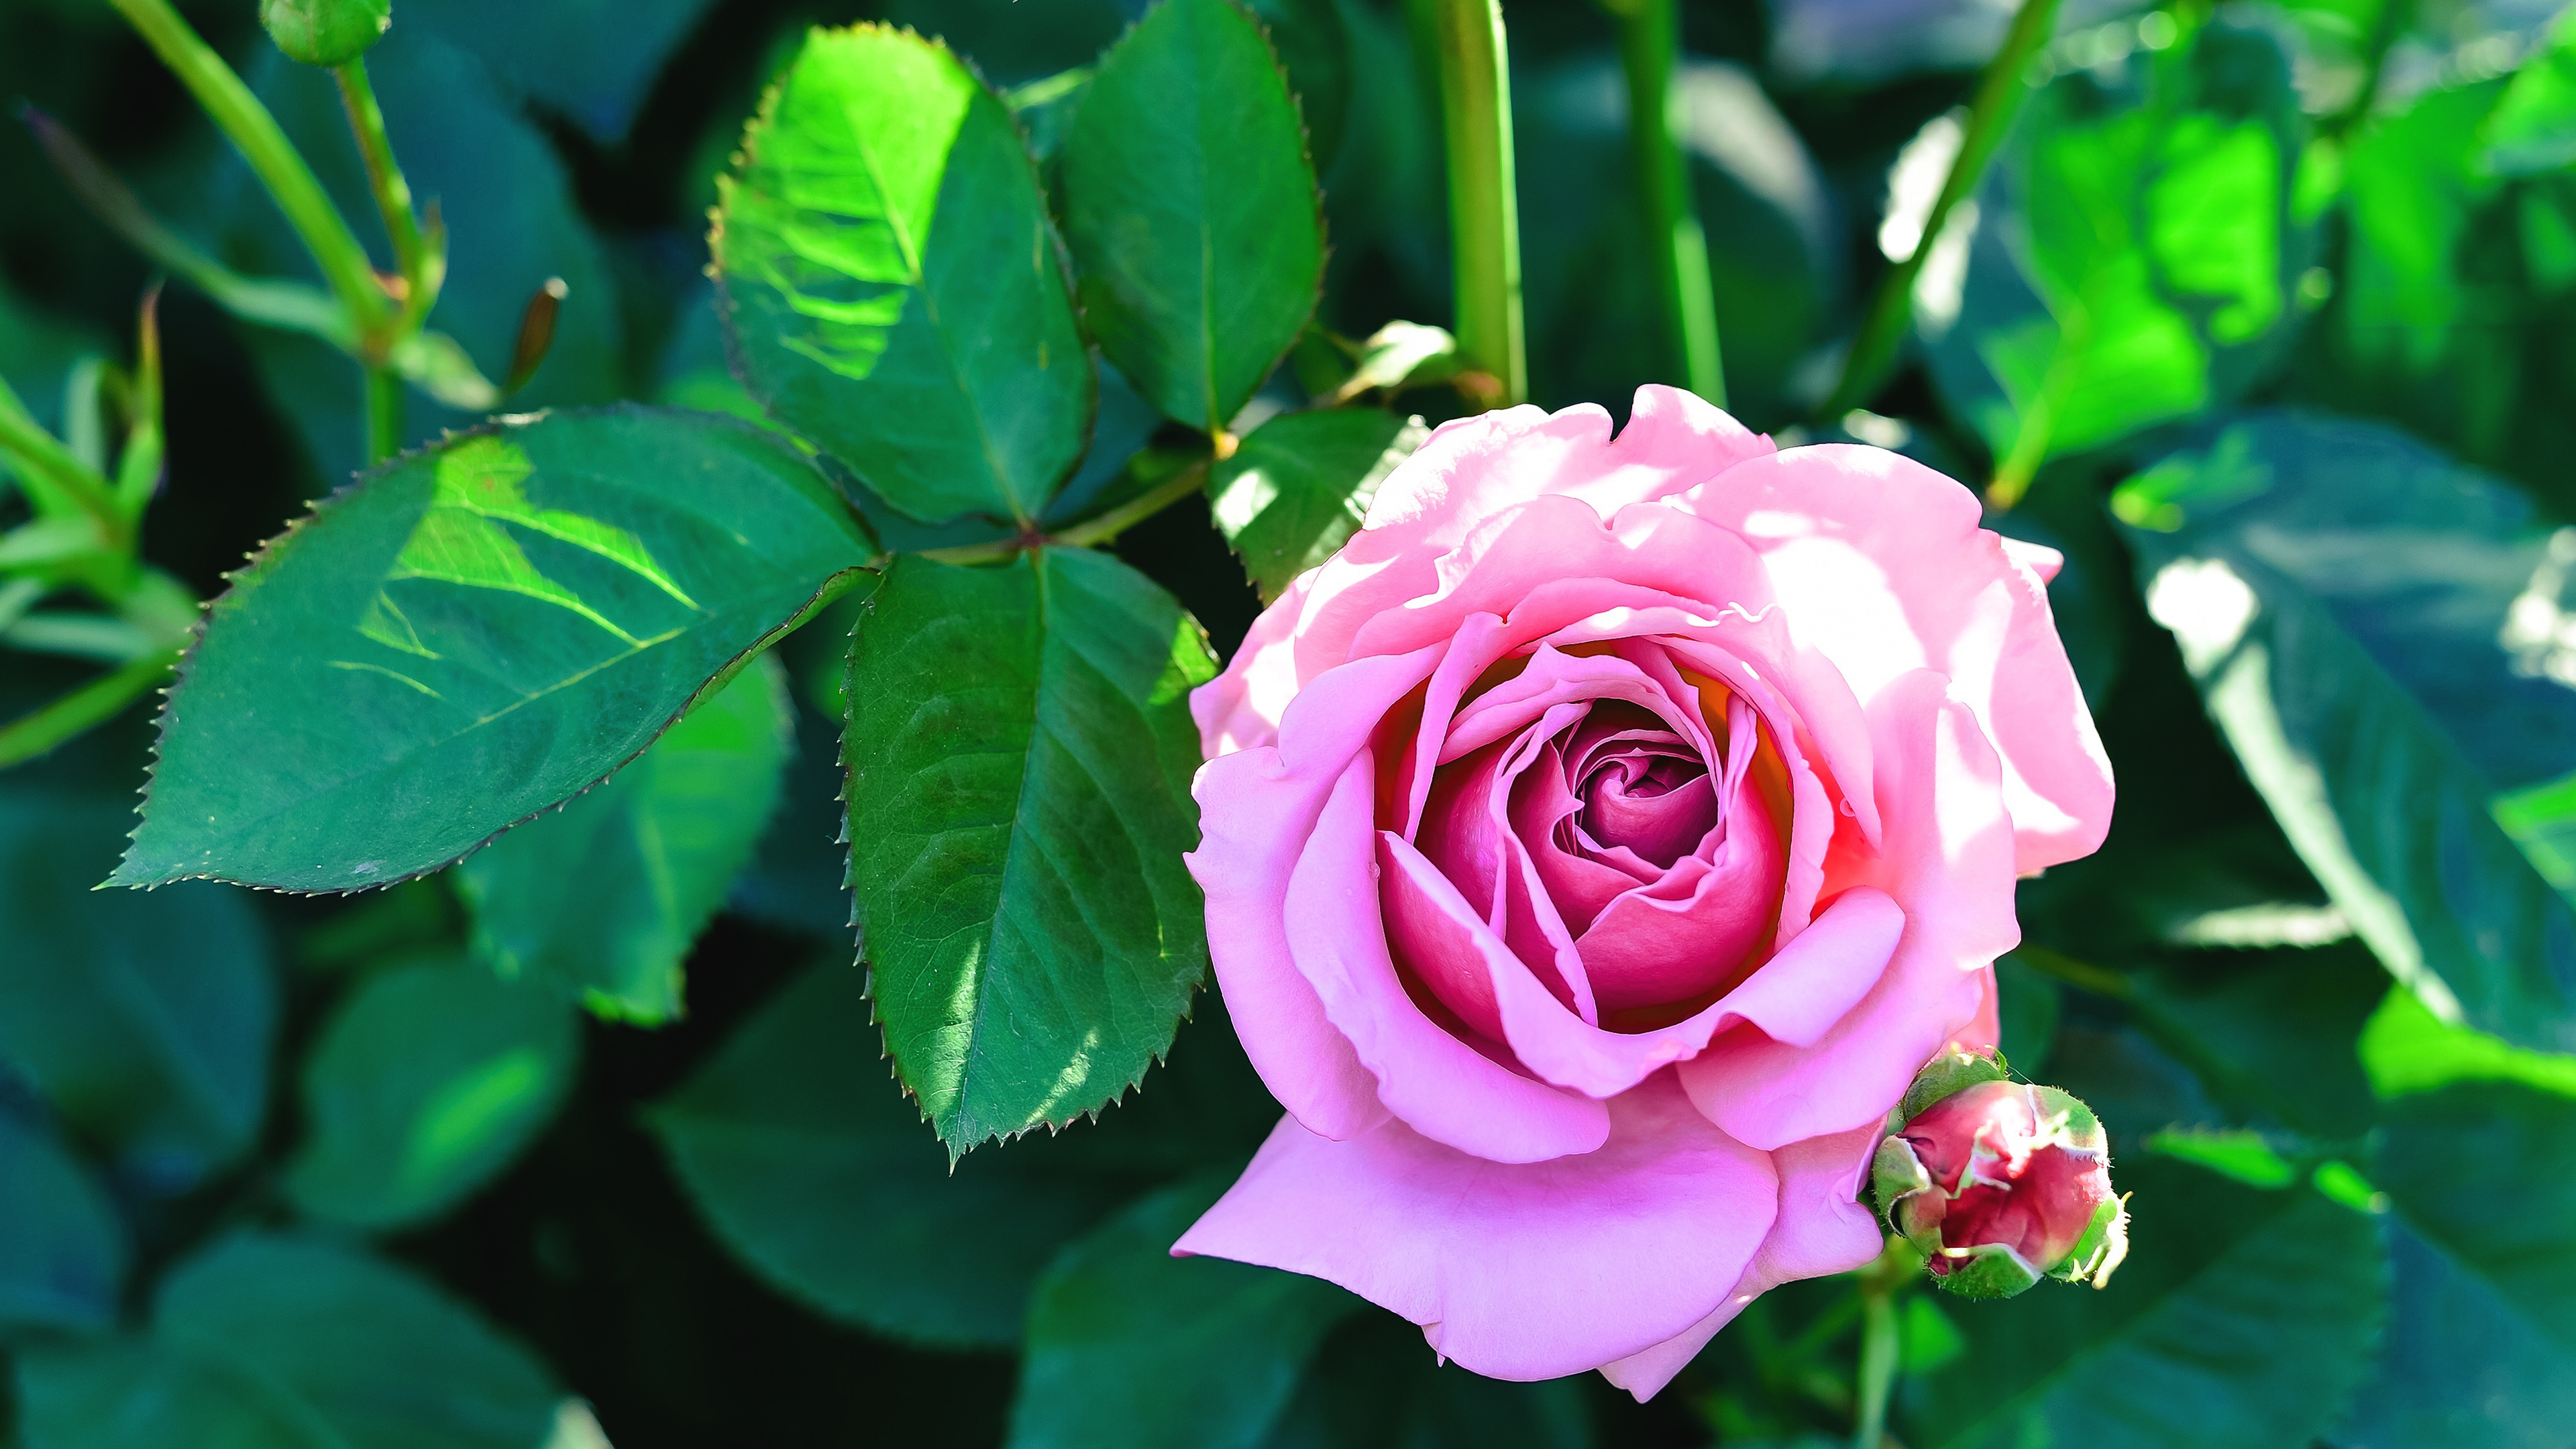 3840х2160, обои 4к, розовая  роза, куст, зеленые листья, бутон, лето,  pink rose, bush, green leaves, bud, summer